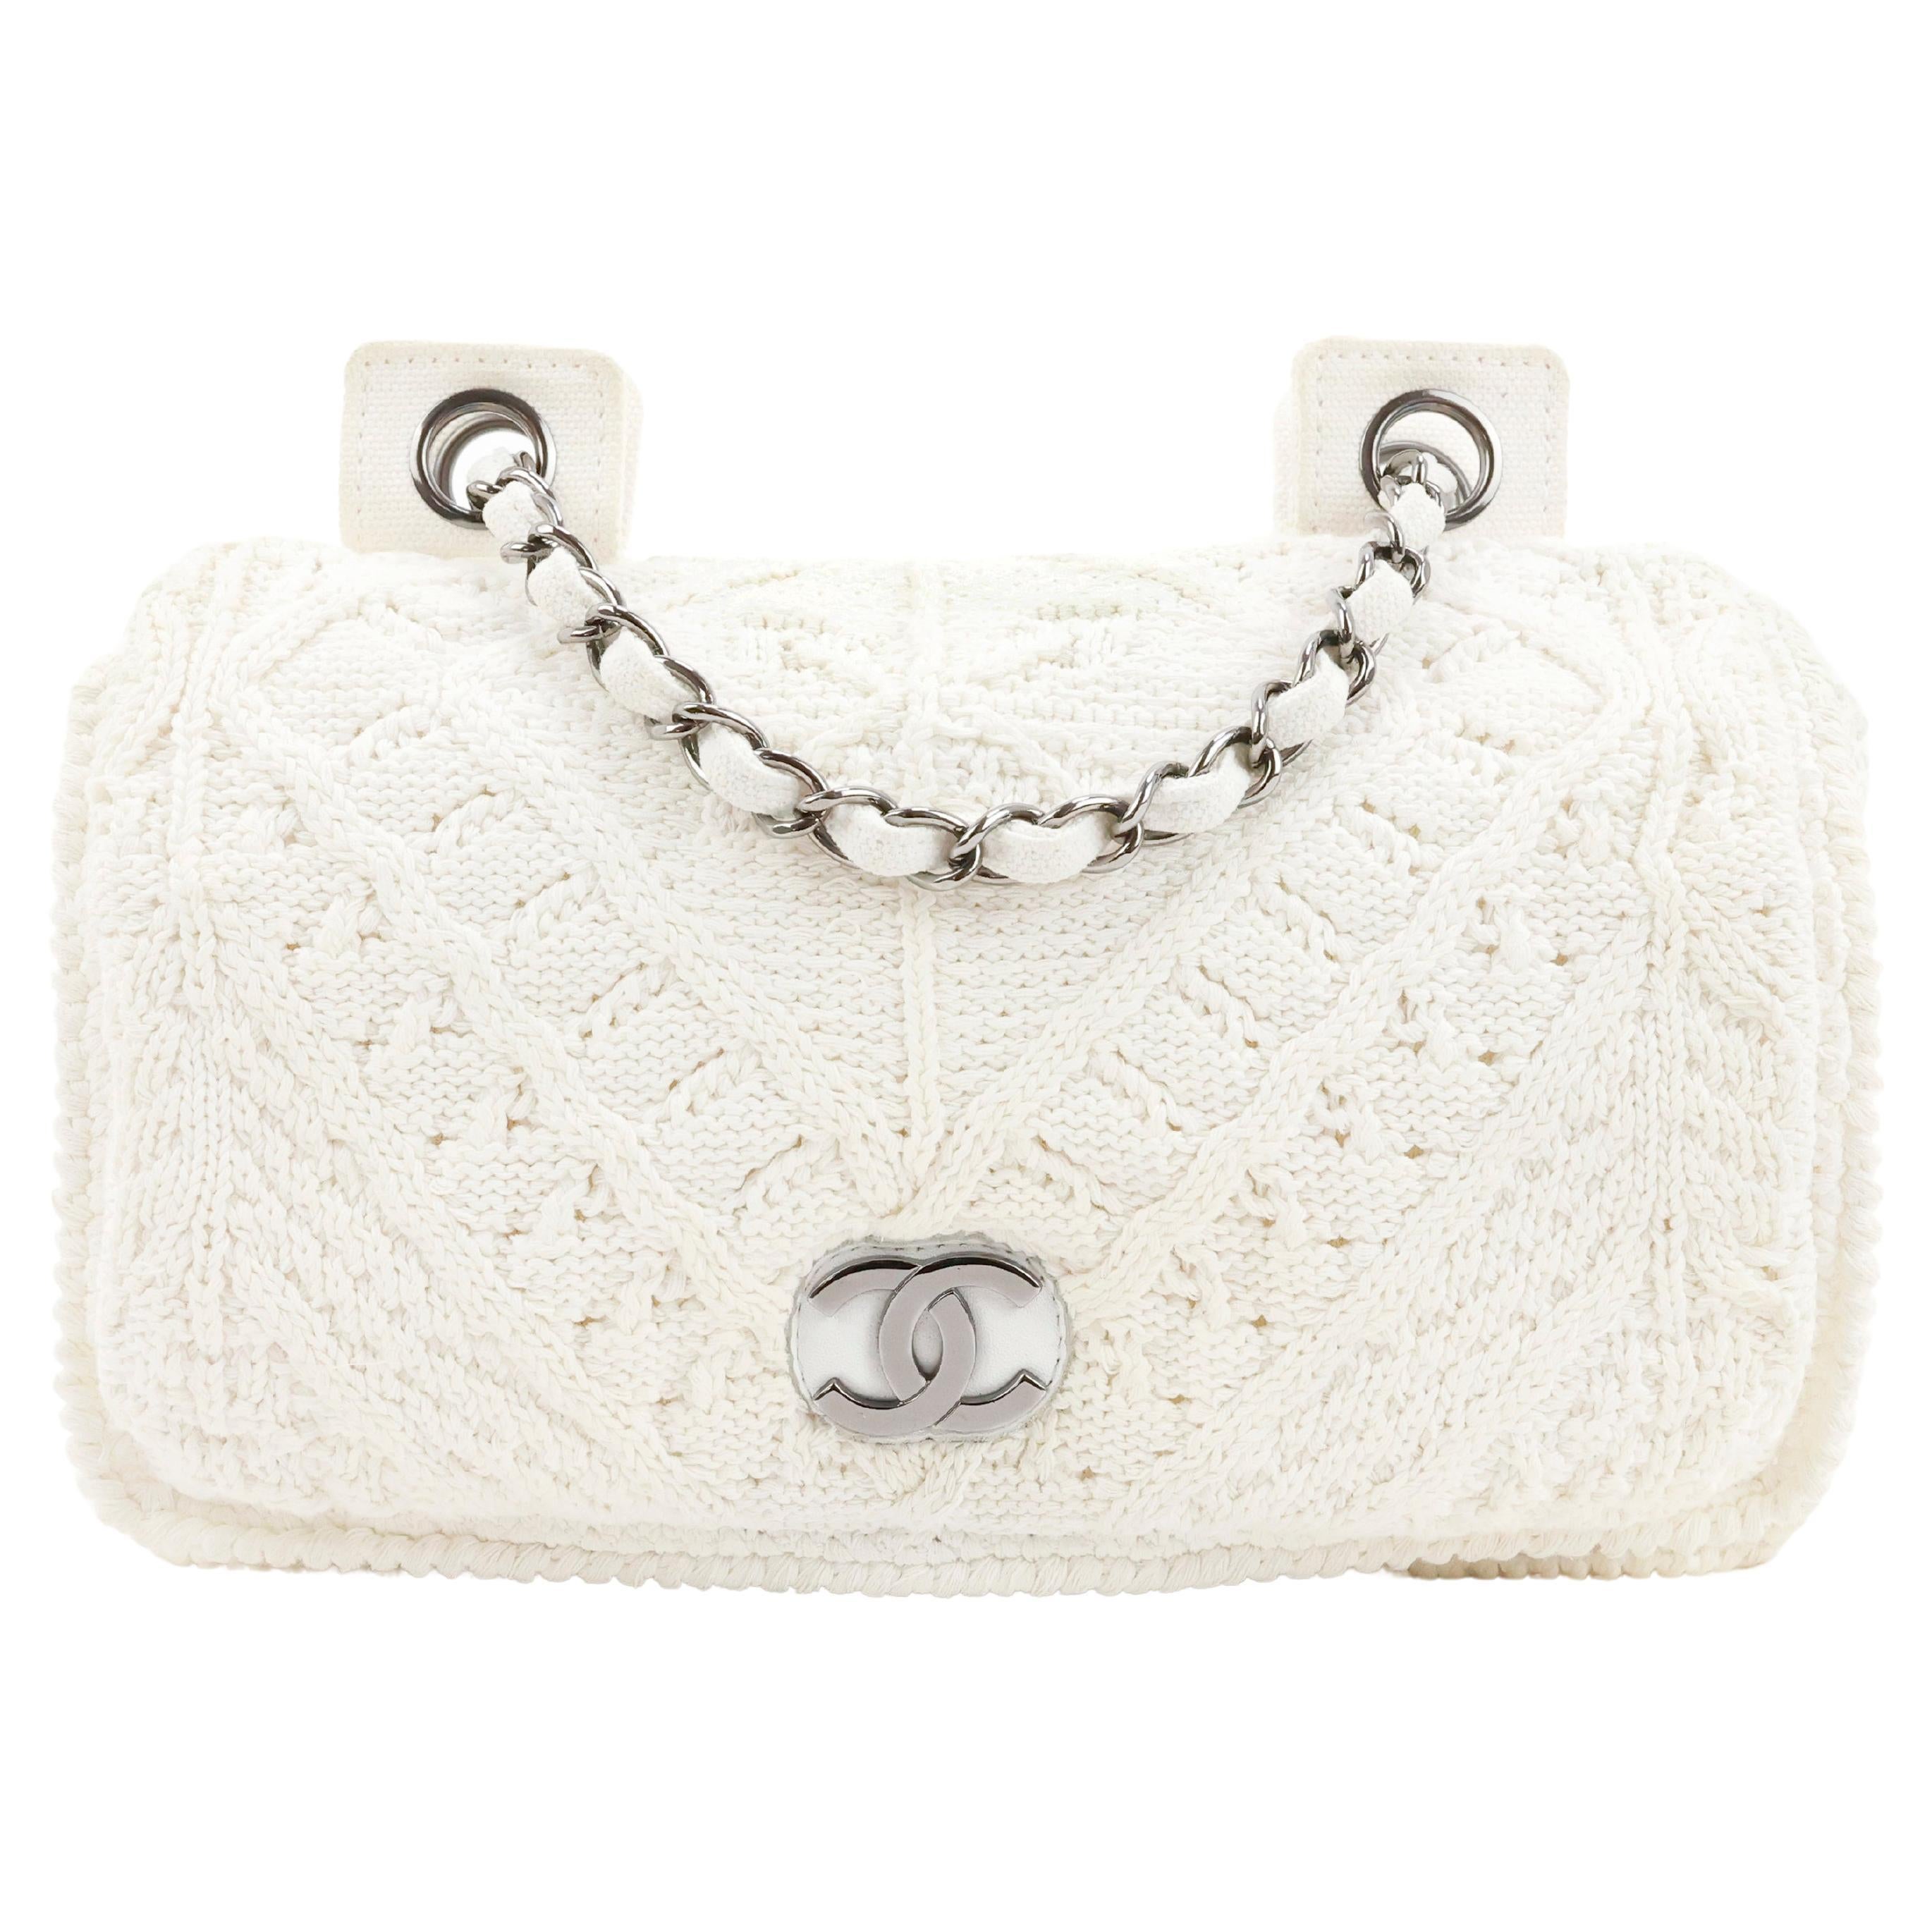 Chanel Flap Bag in Crochet For Sale